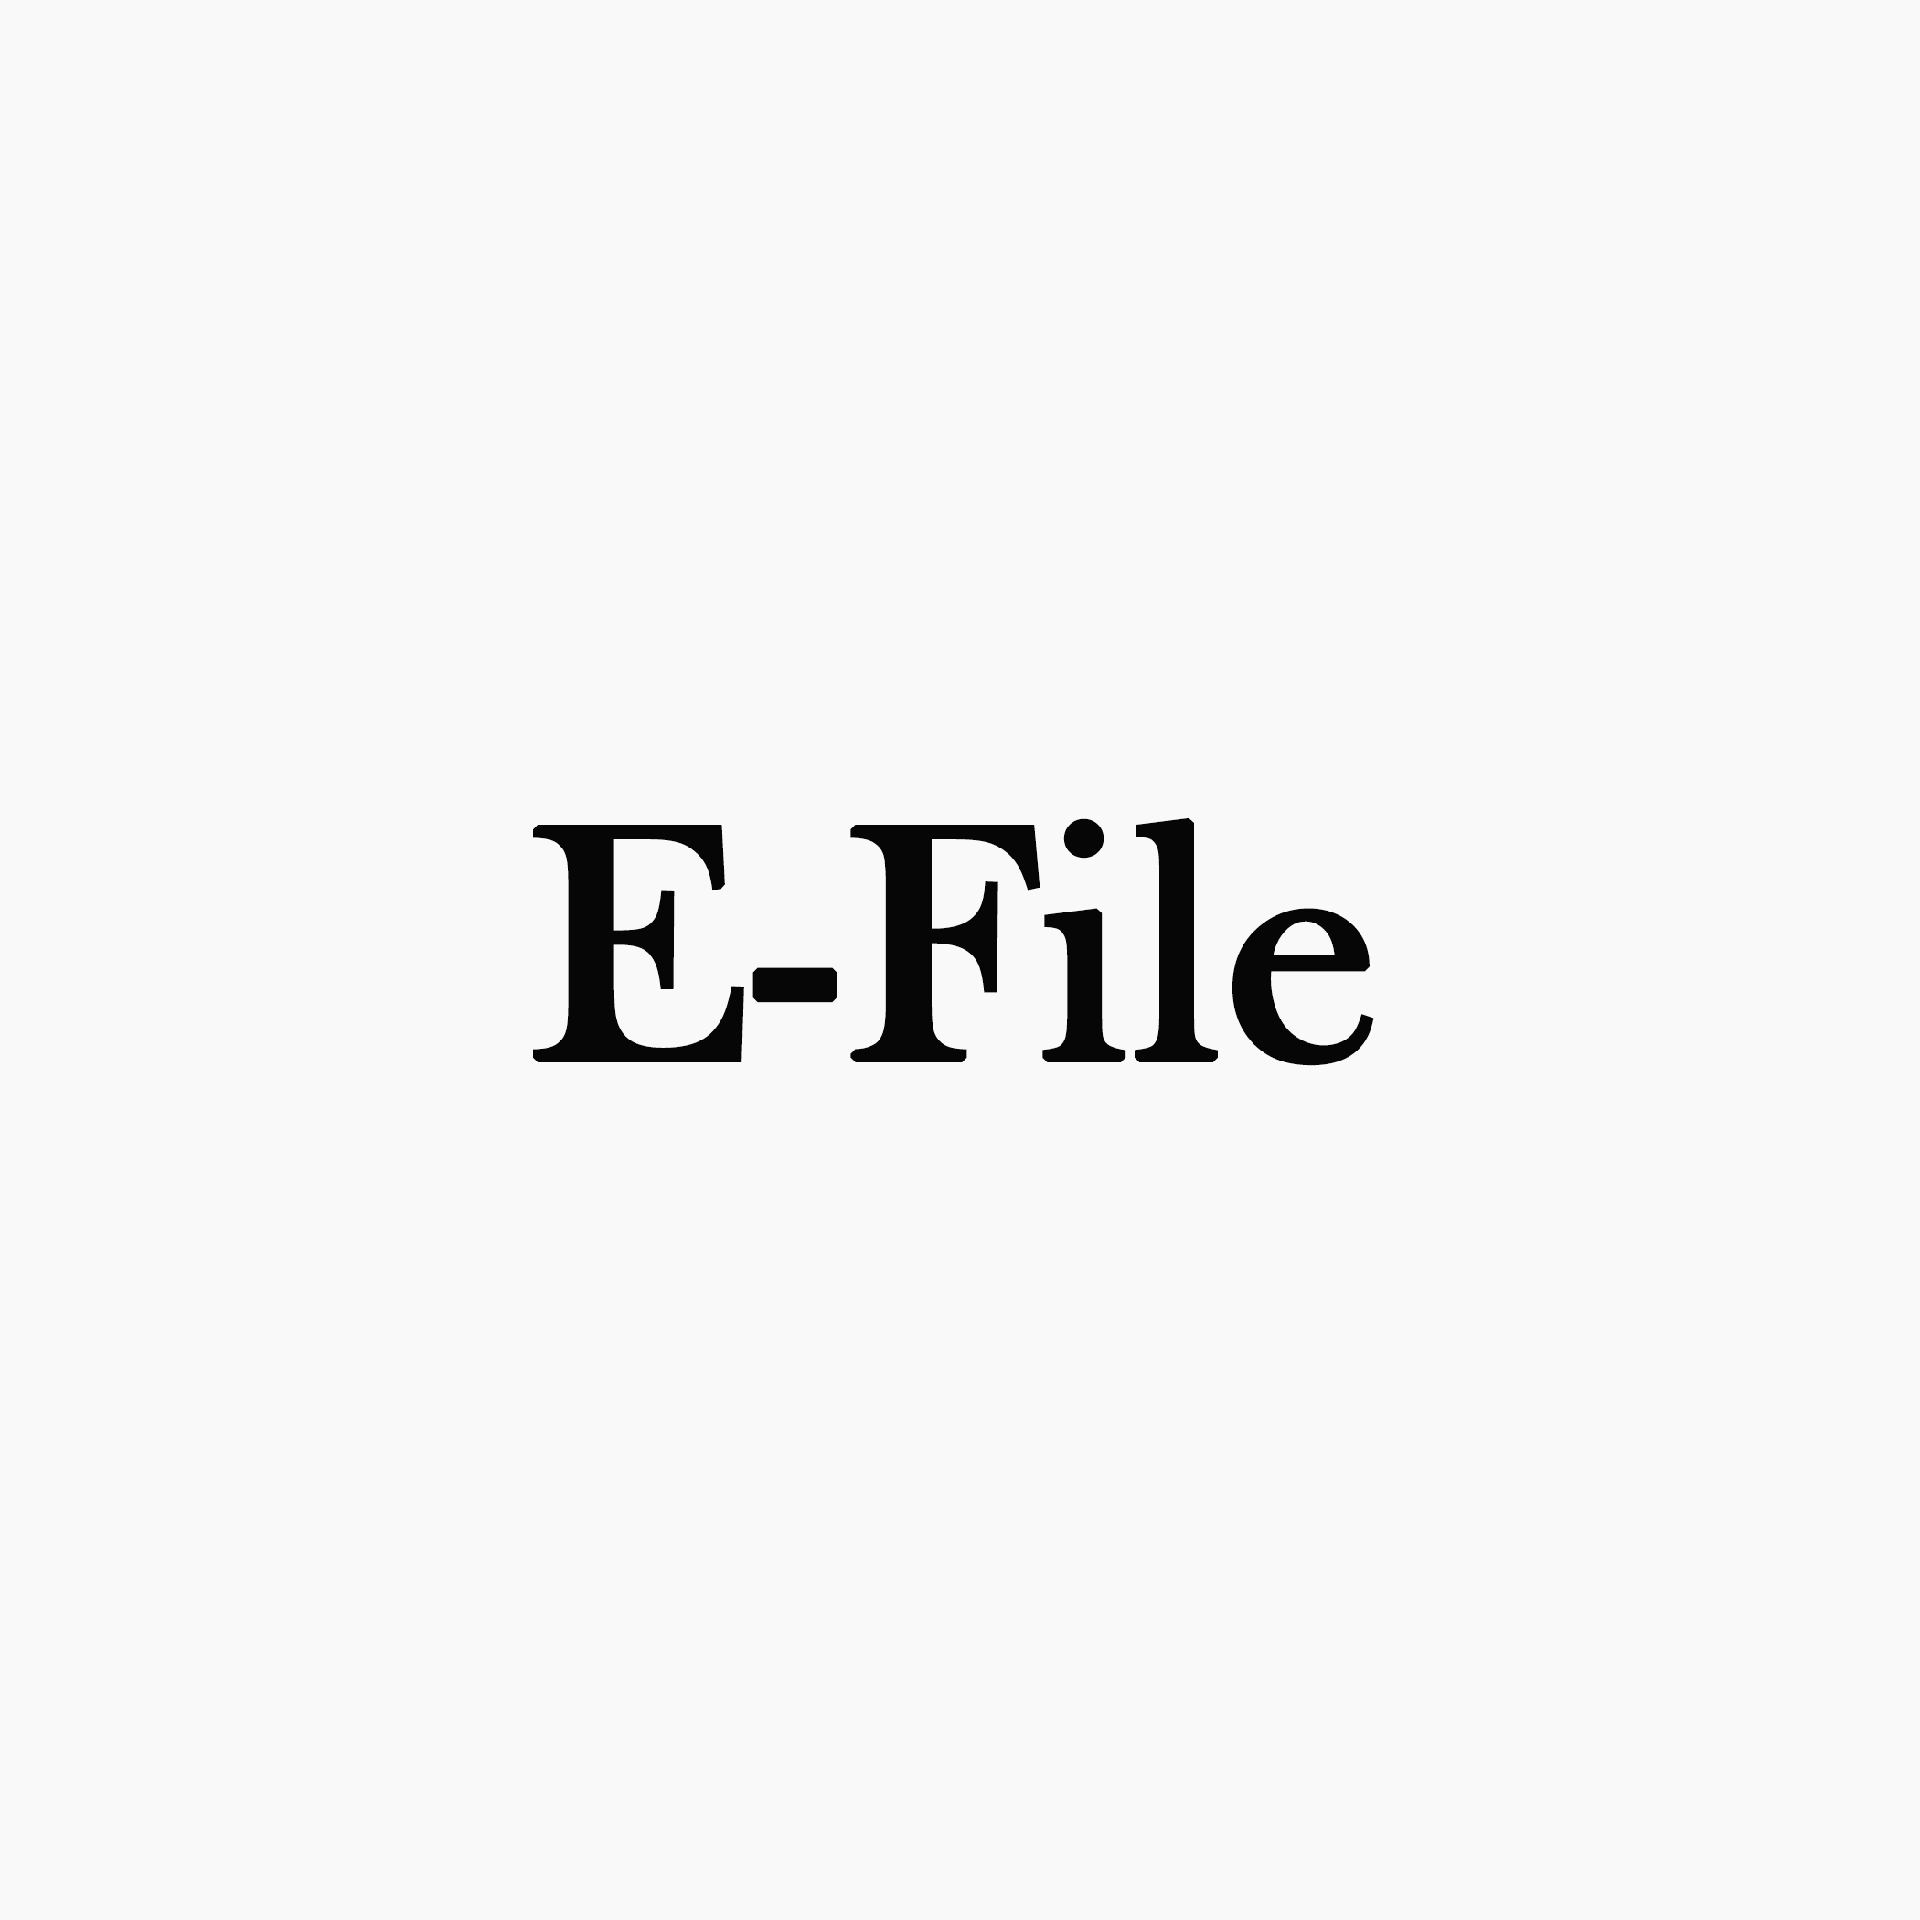 Product Brand: E-File